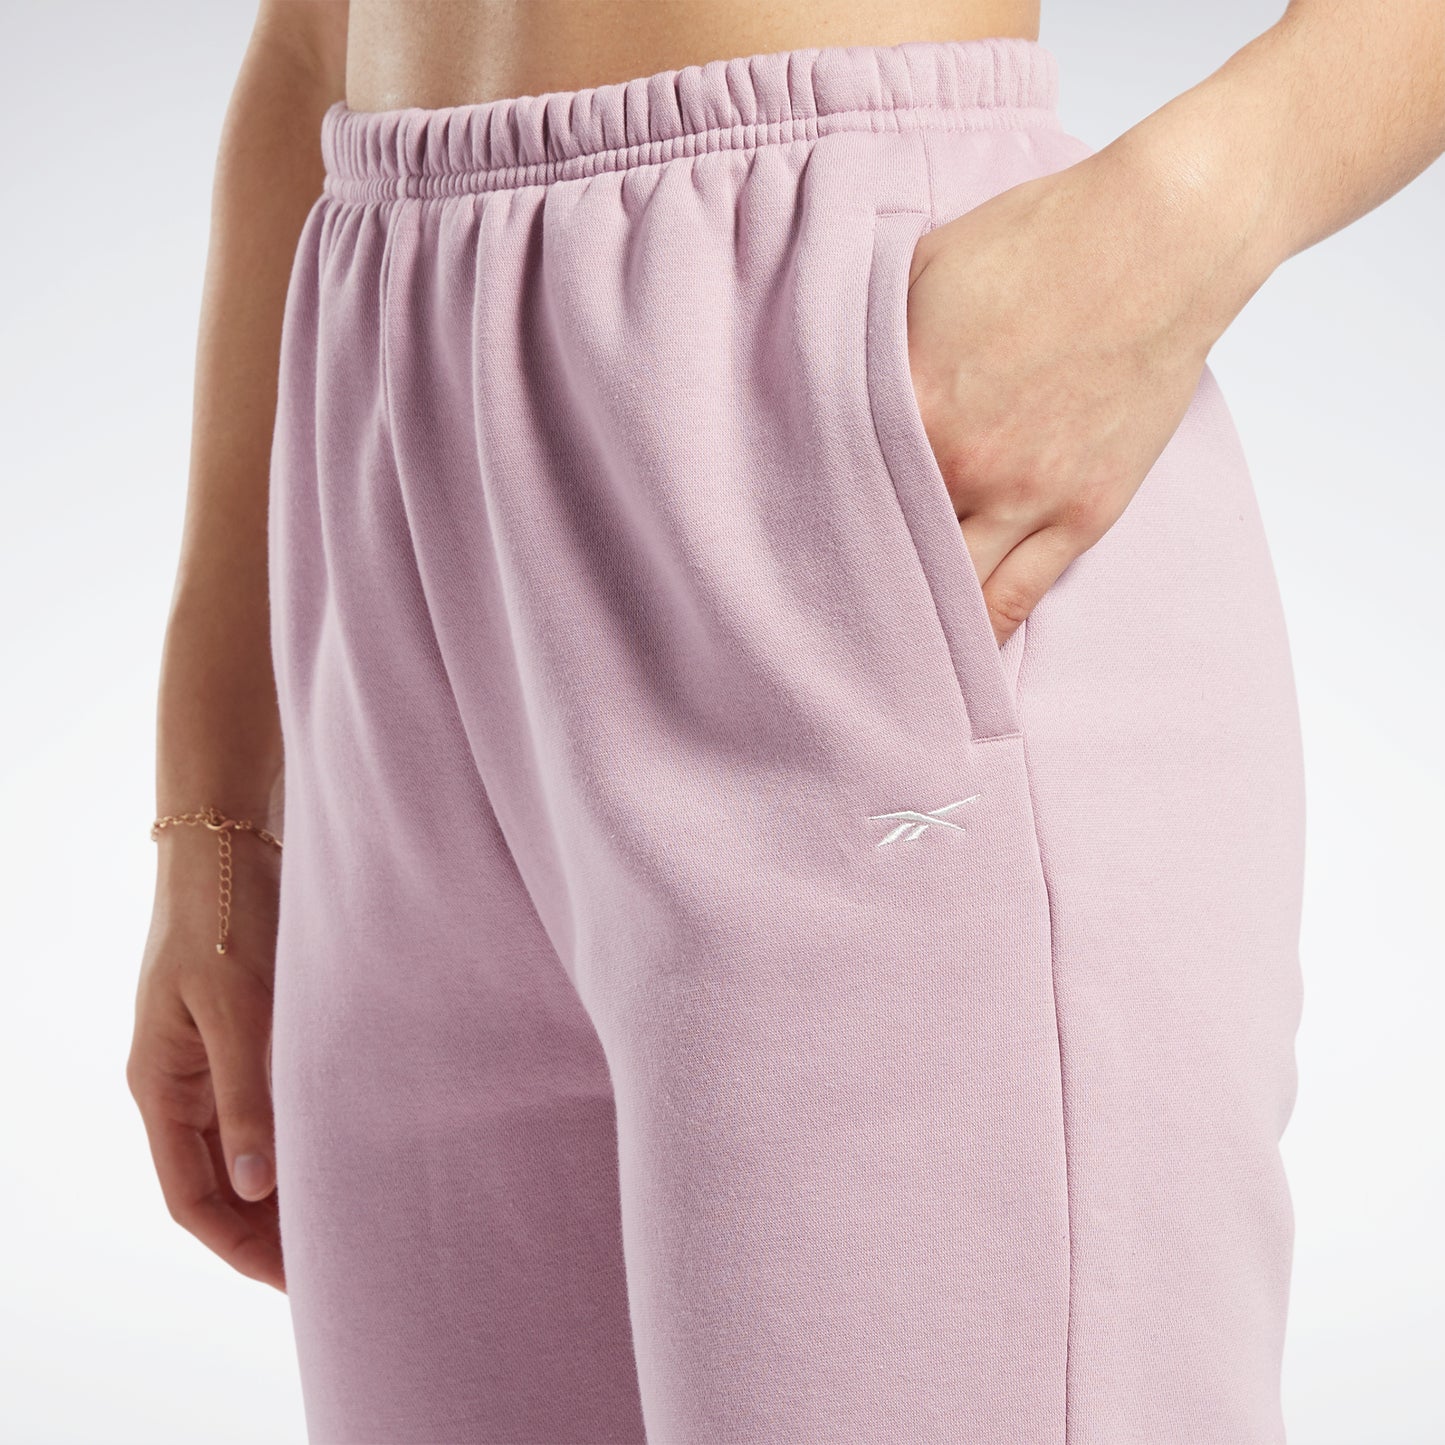 Women's Cuffed Reebok Oversized Graphic Jogger Pants Dusty Pink